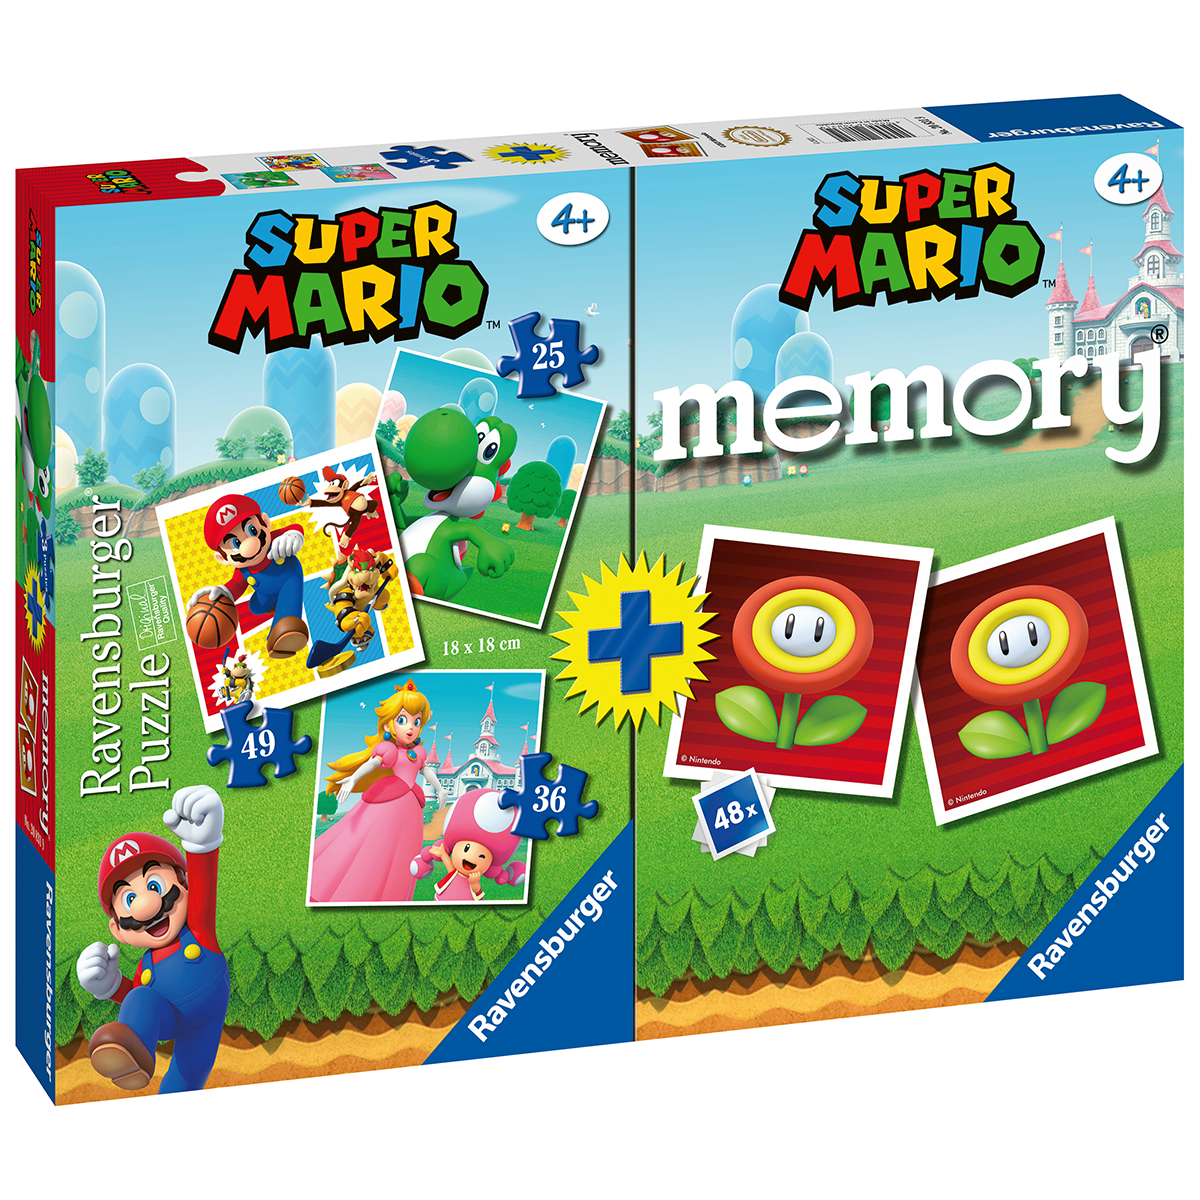 Ravensburger multipack super mario, puzzle e memory - RAVENSBURGER, Super Mario